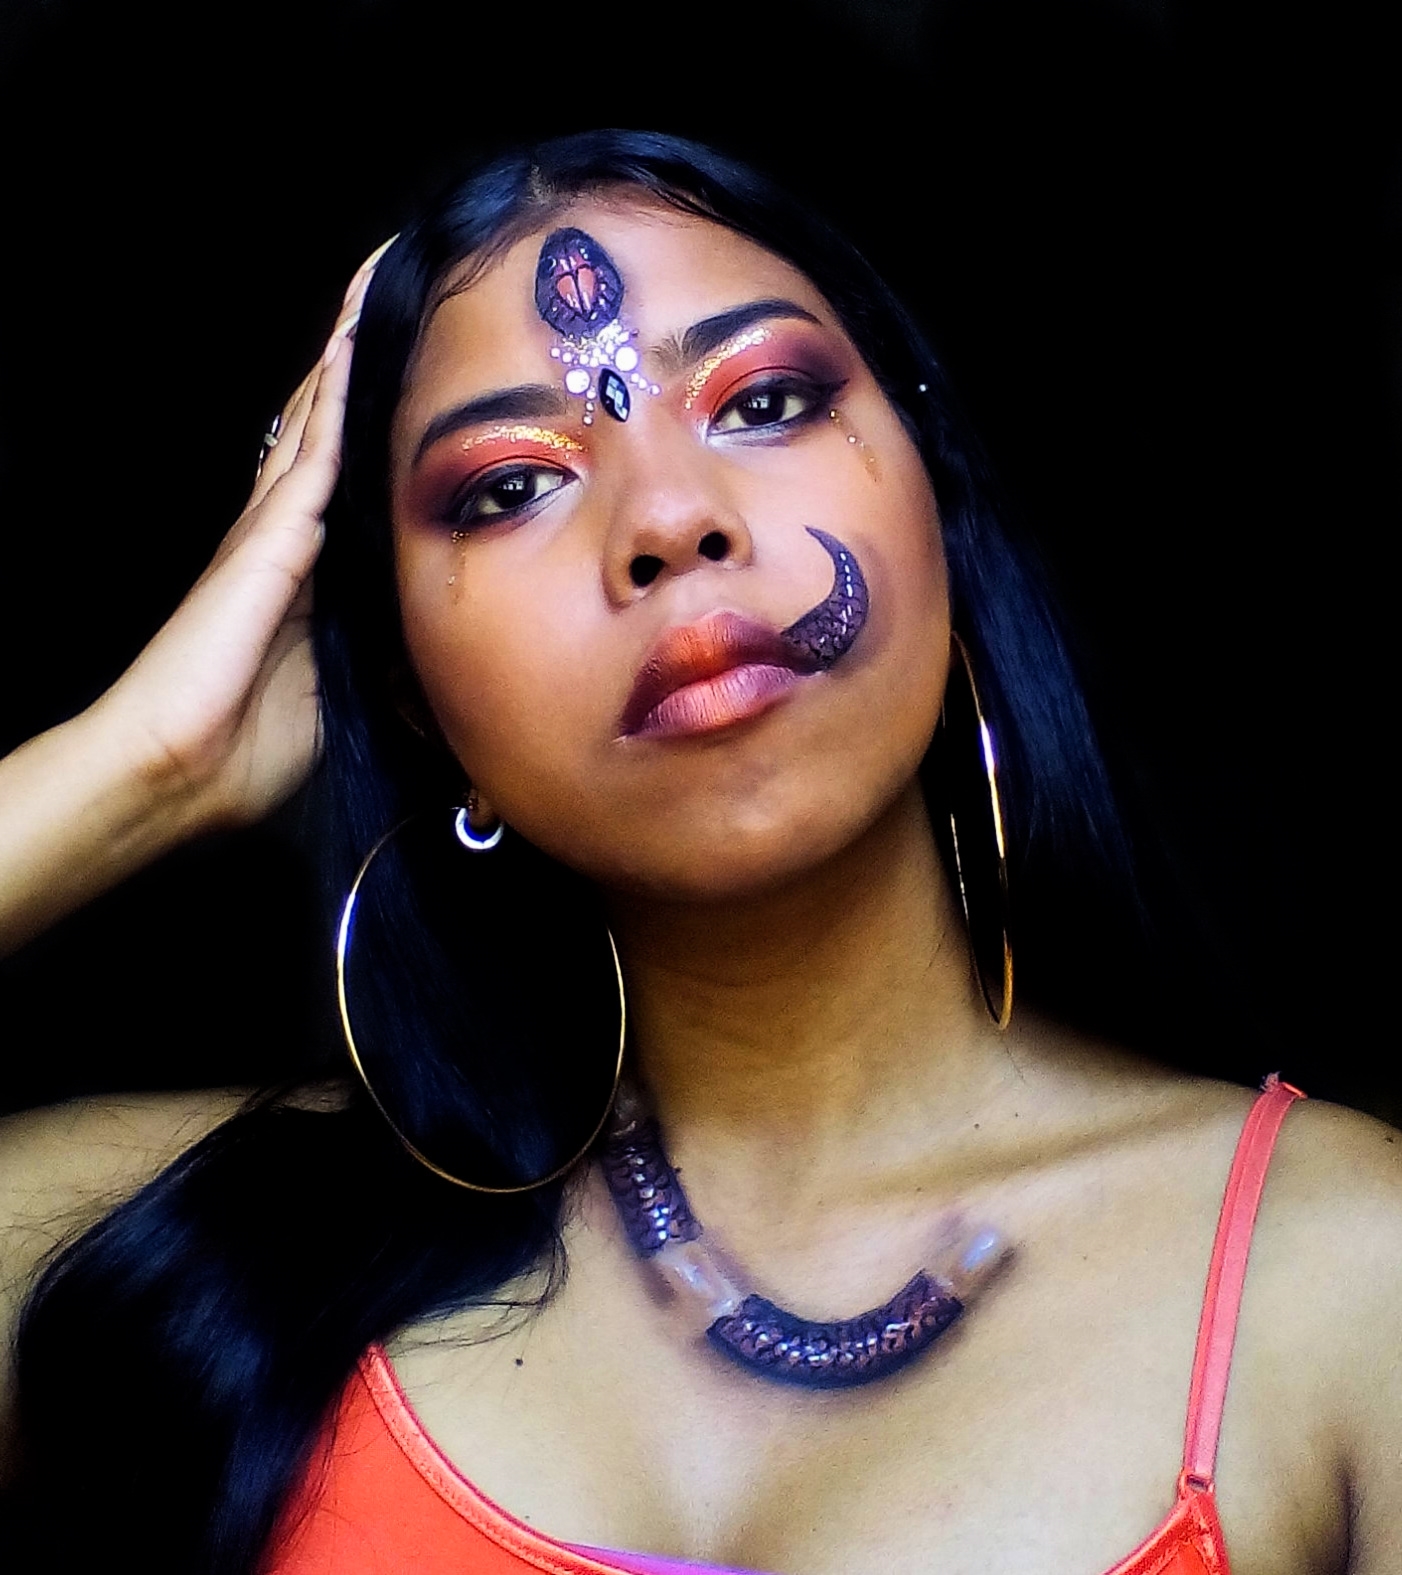 Hindu style makeup of snake inside me — Hive